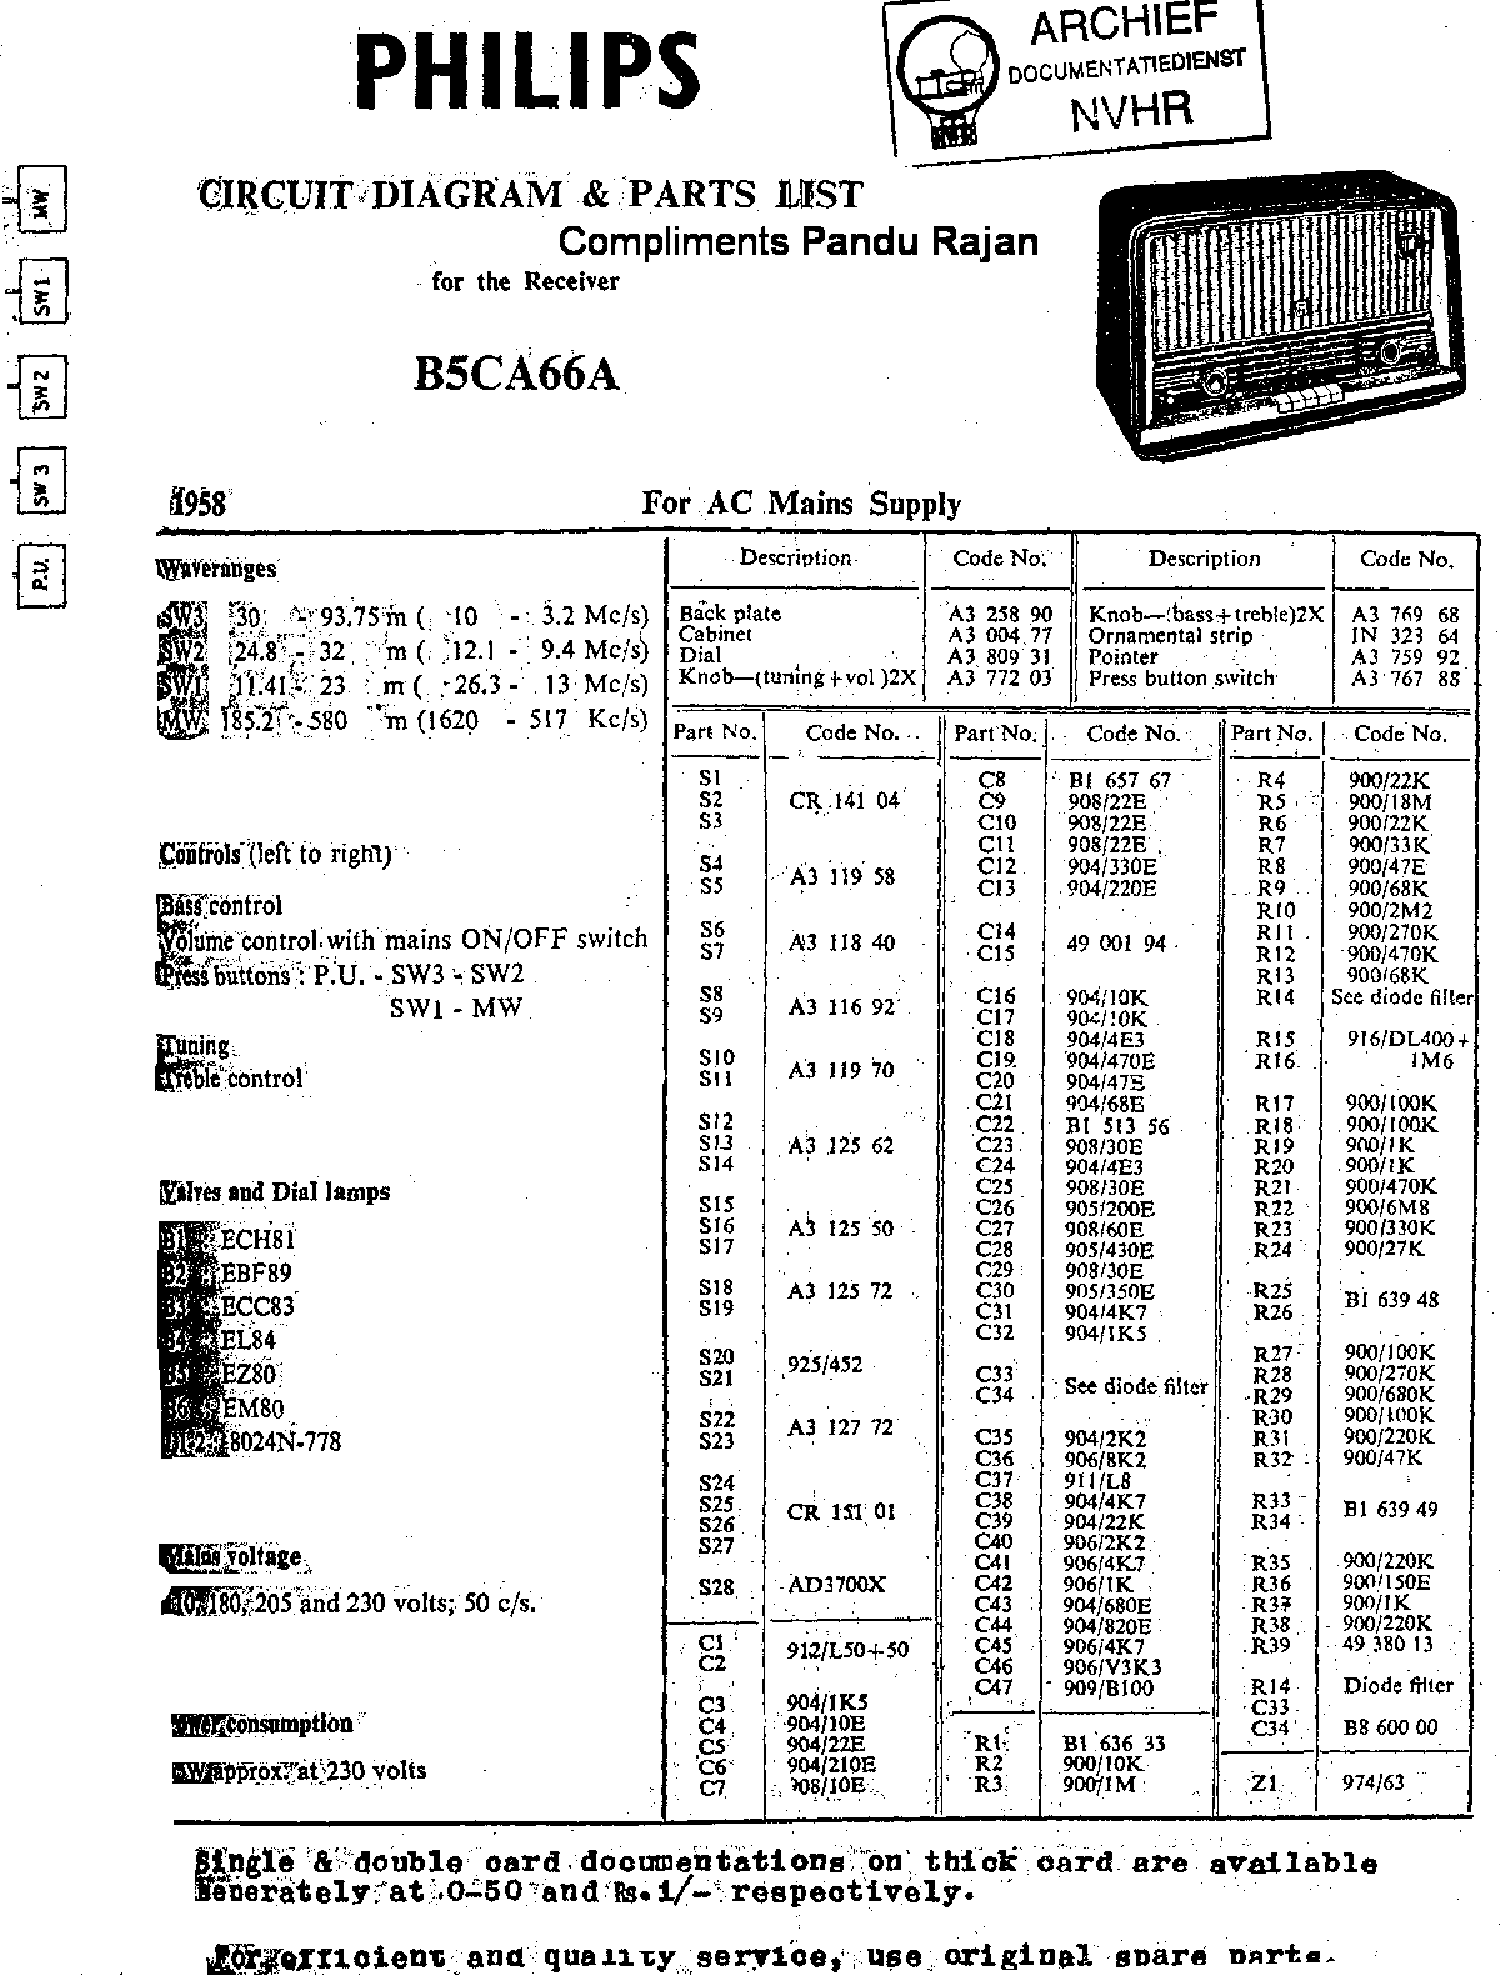 PHILIPS B5CA66A AC SUPER RECEIVER 1959 SM service manual (1st page)